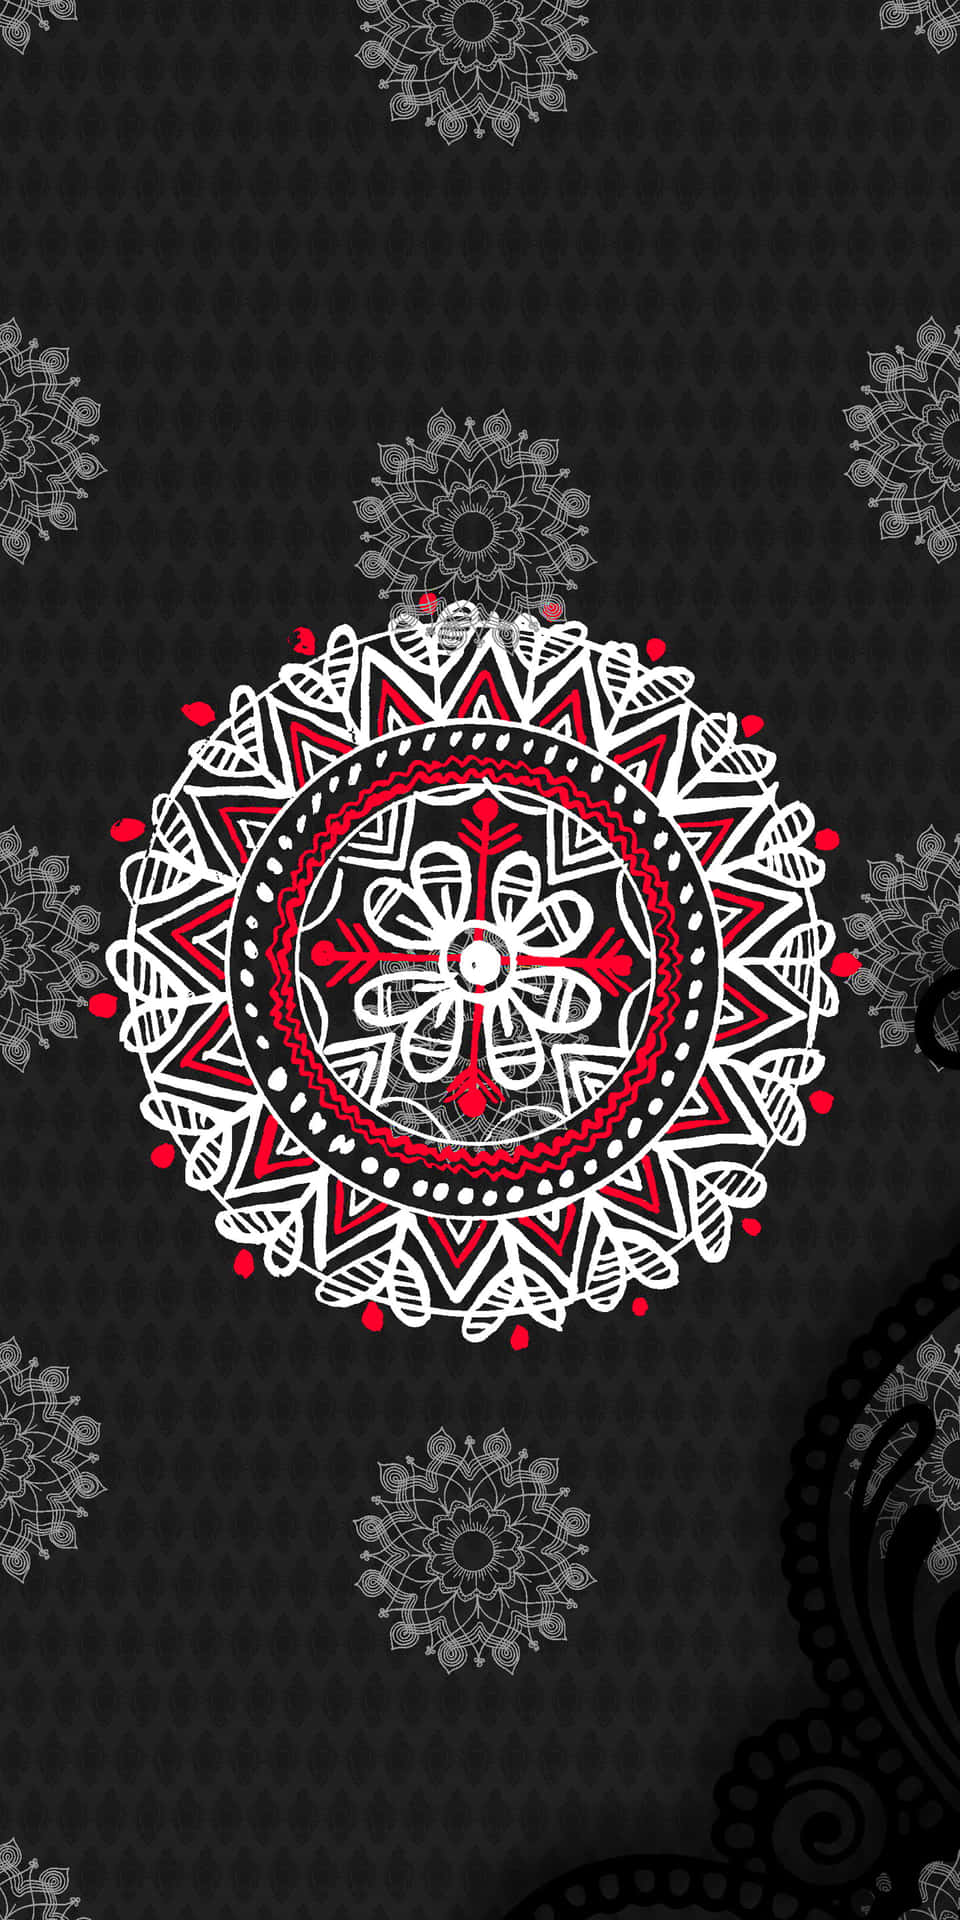 Intricate Mandala Art On Black Background